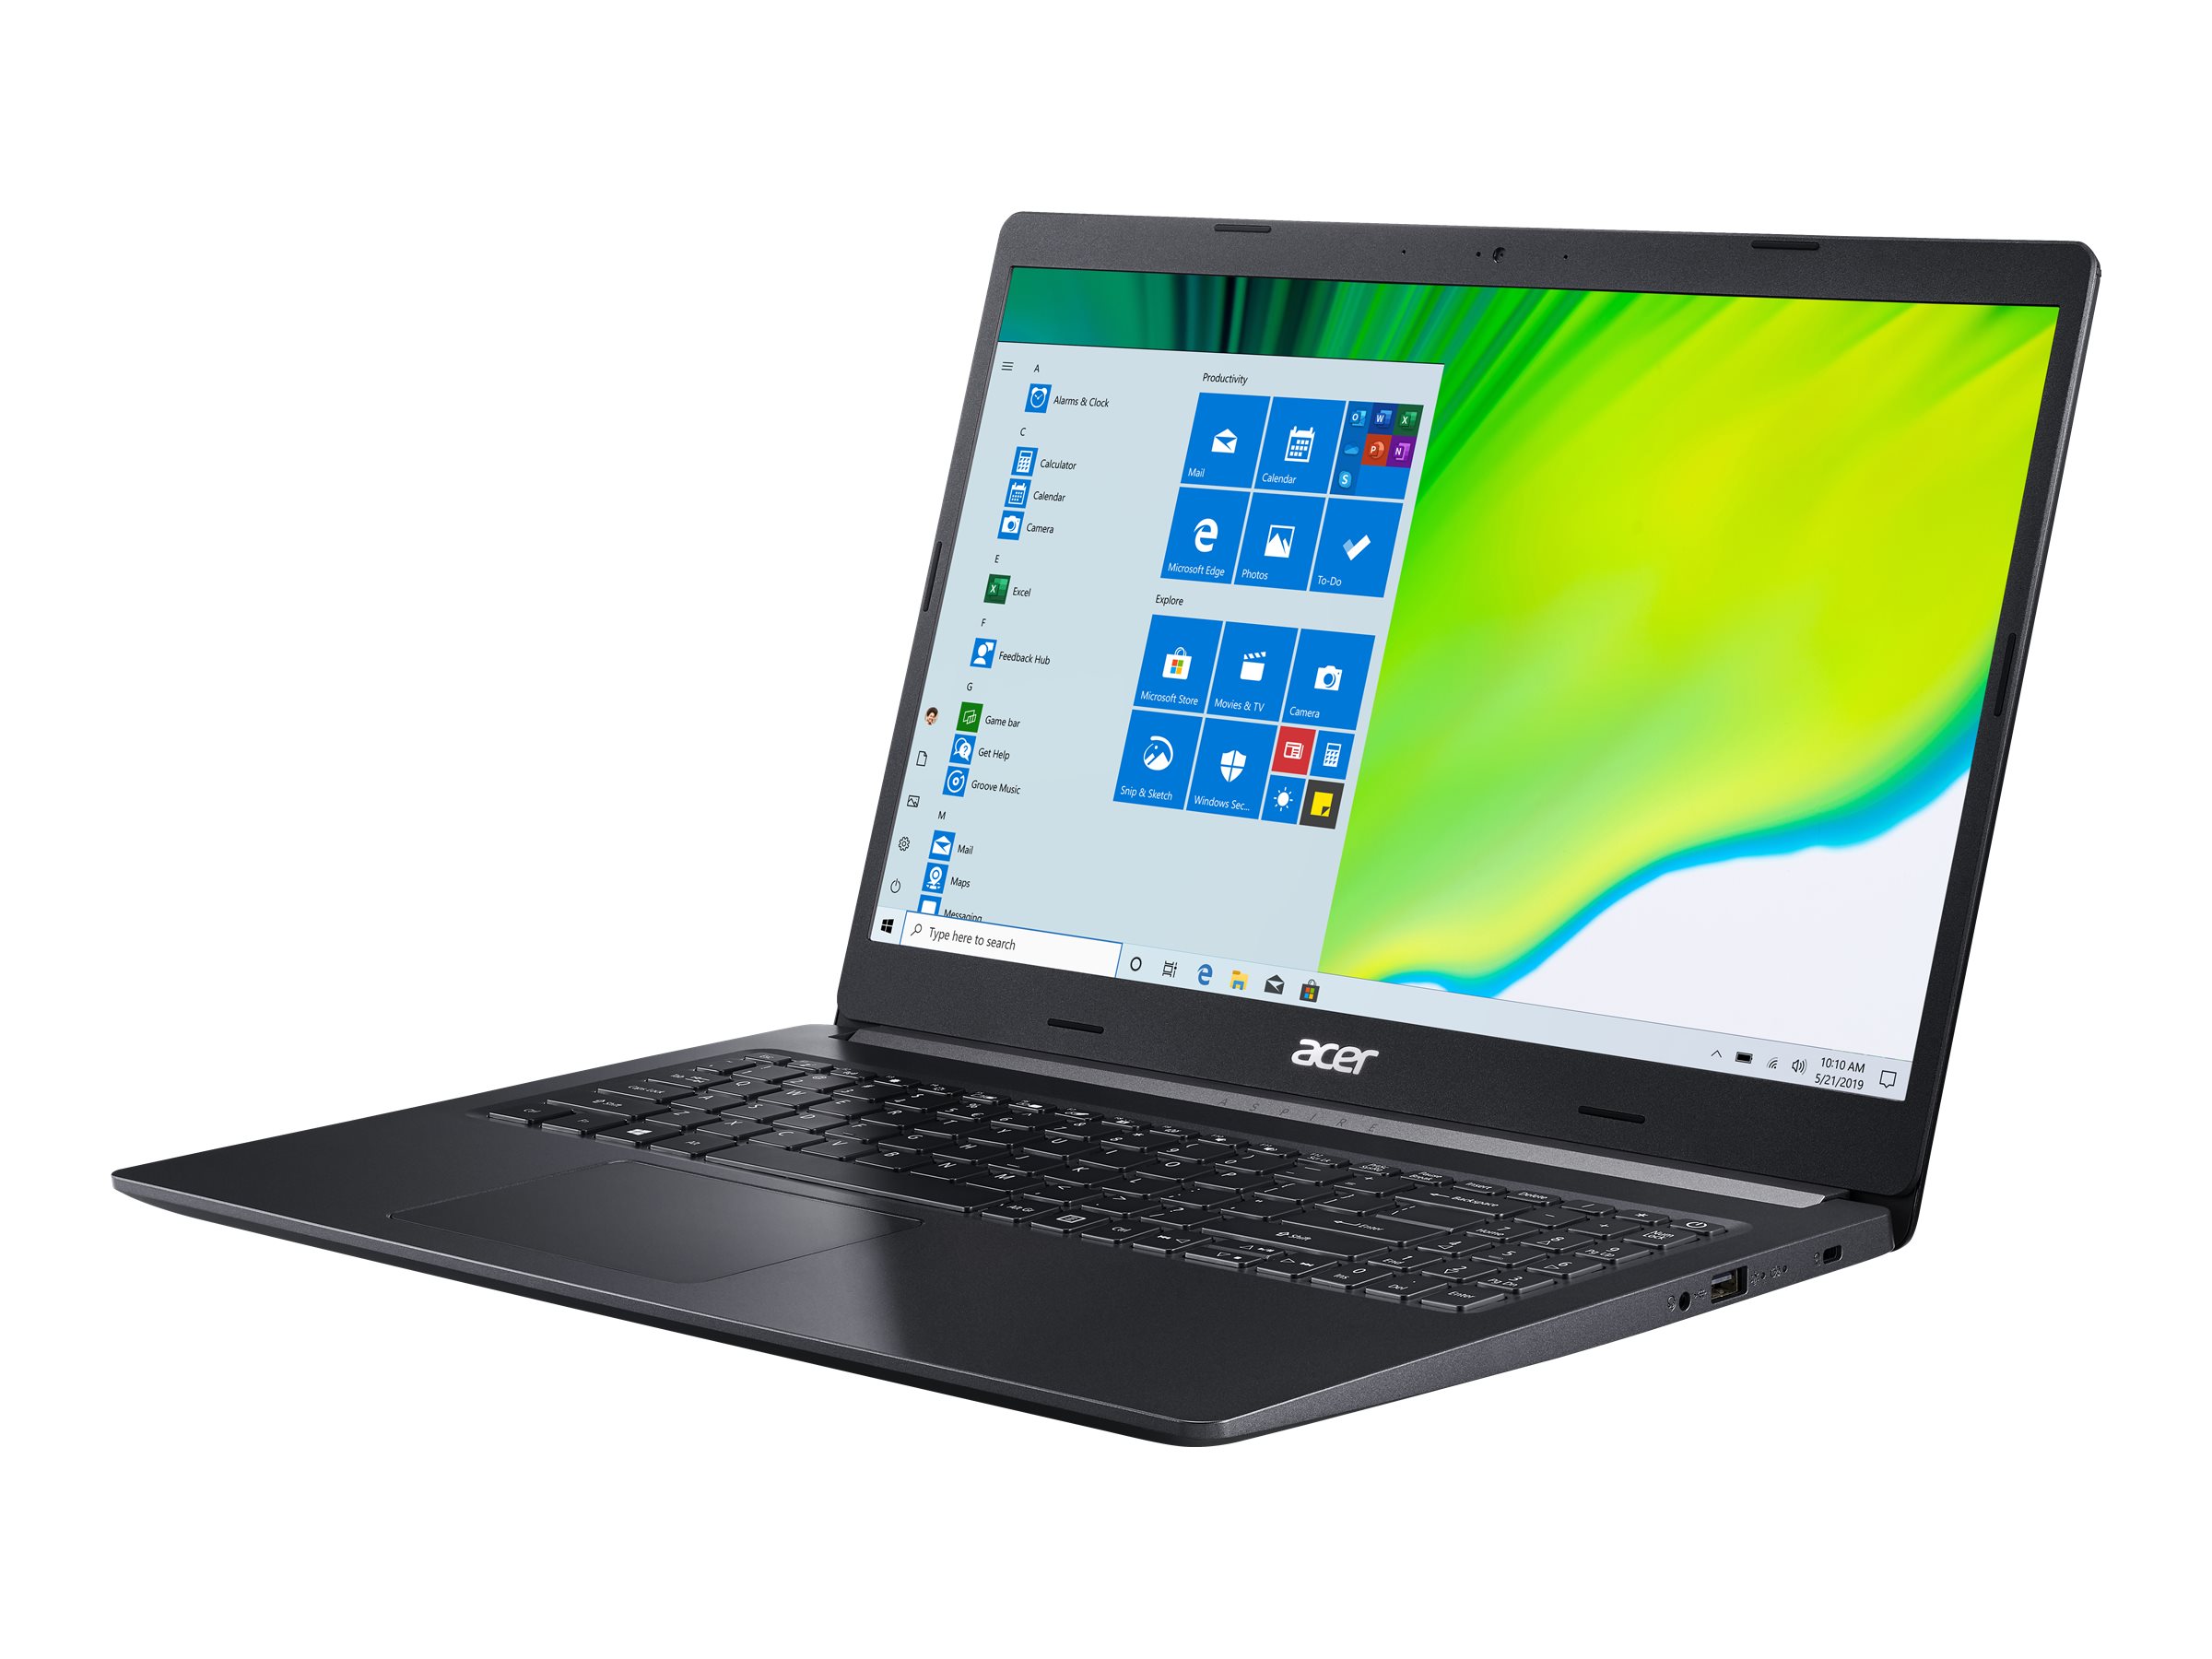 Acer Aspire 5 A515-44-R4M5 - AMD Ryzen 5 4500U / 2.3 GHz - Win 10 Home 64-bit - Radeon HD - 8 GB RAM - 512 GB SSD - 15.6" 1366 x 768 (HD) - Wi-Fi 5 - charcoal black - kbd: US Intl - image 1 of 10